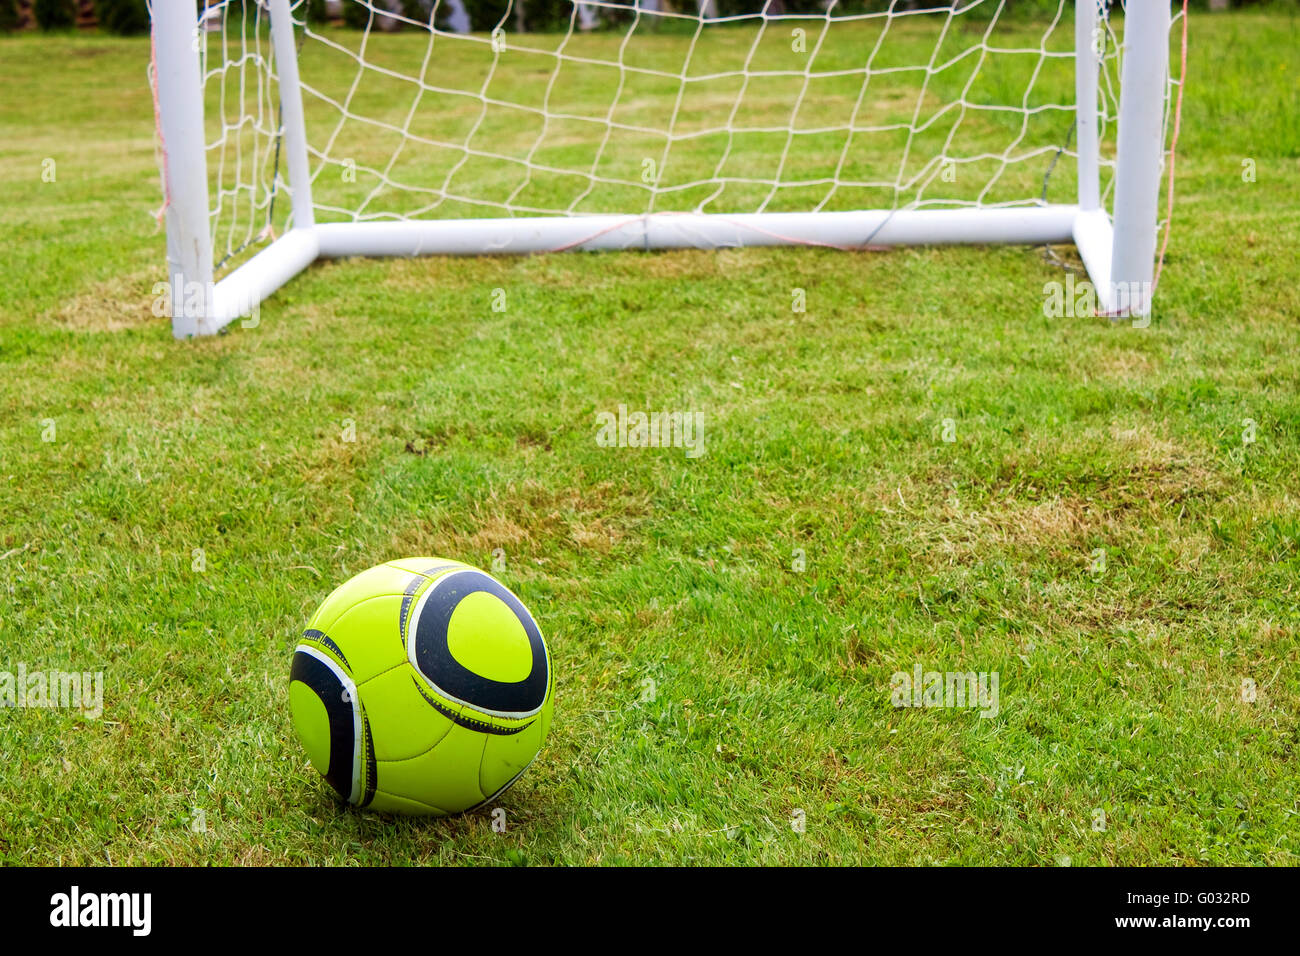 Jabulani Soccer ball and goal Stock Photo